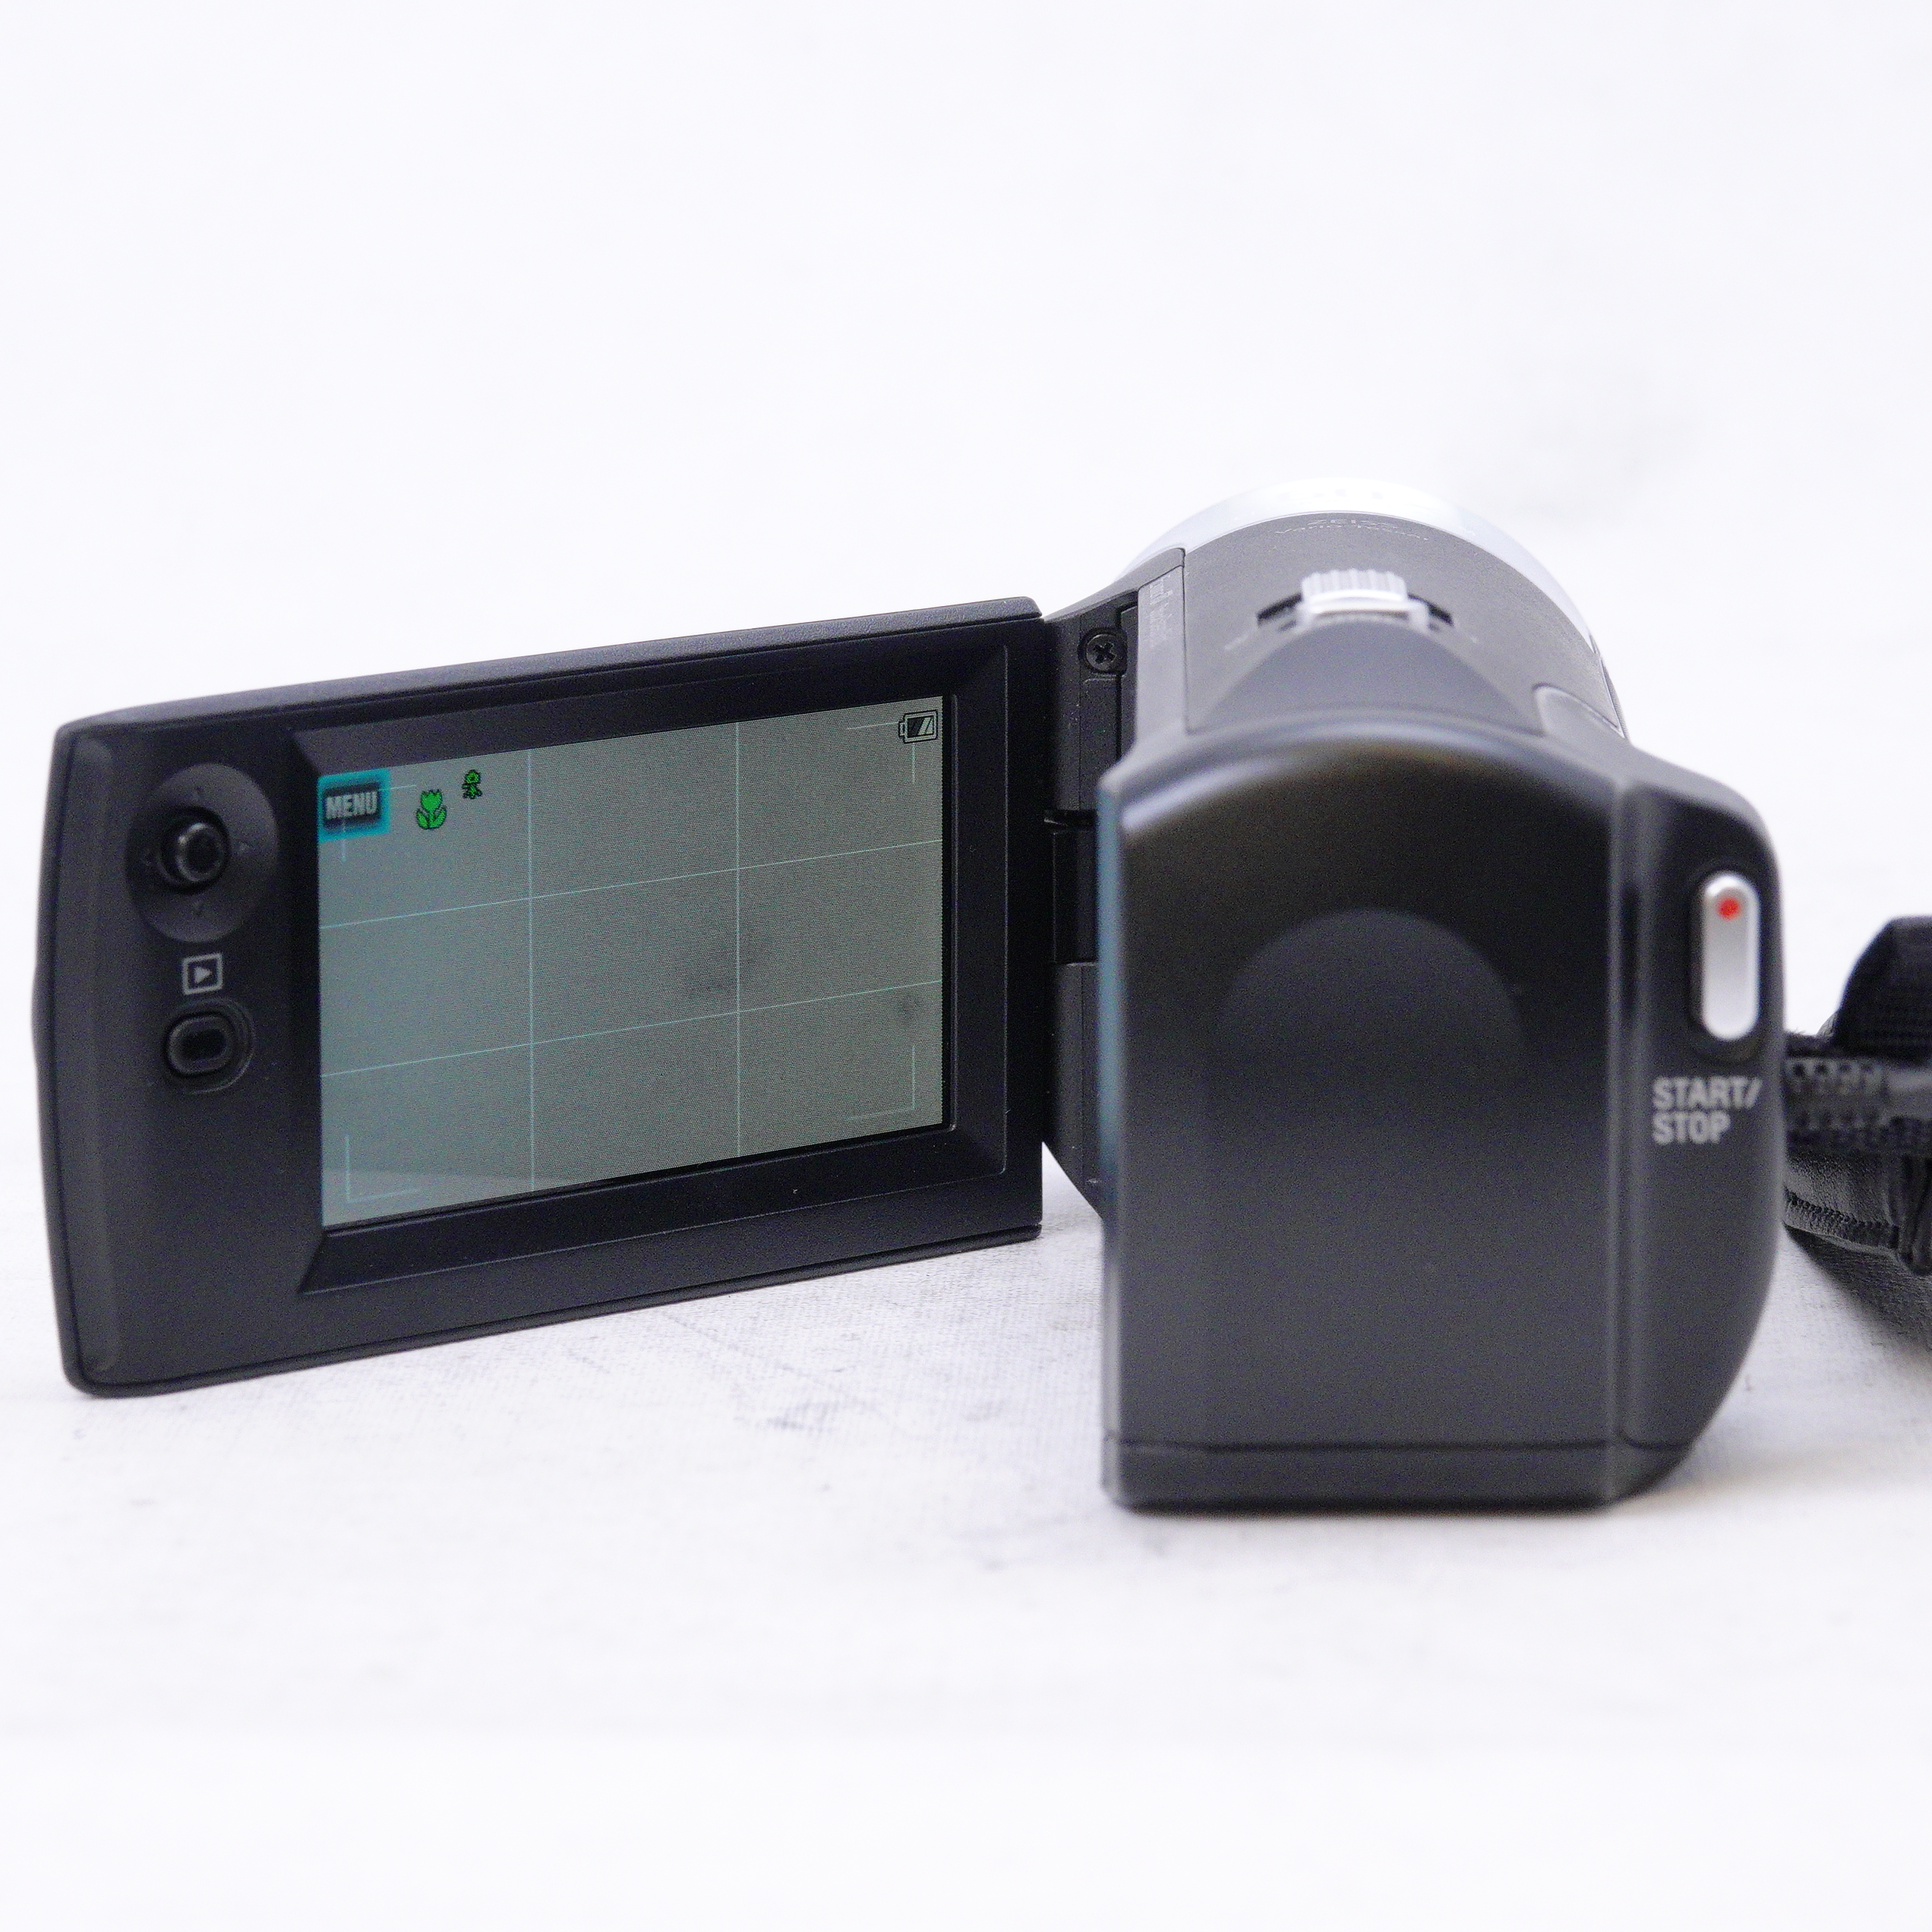 Sony Handycam HDR CX405 - USADO